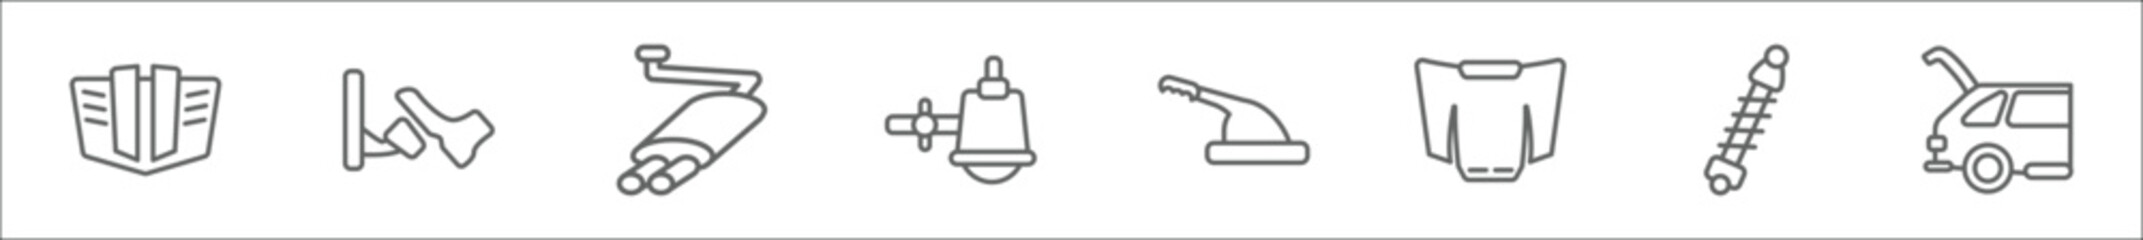 outline set of car parts line icons. linear vector icons such as car hood, car pedal, exhaust, sump, handbrake, bonnet, suspension, boot